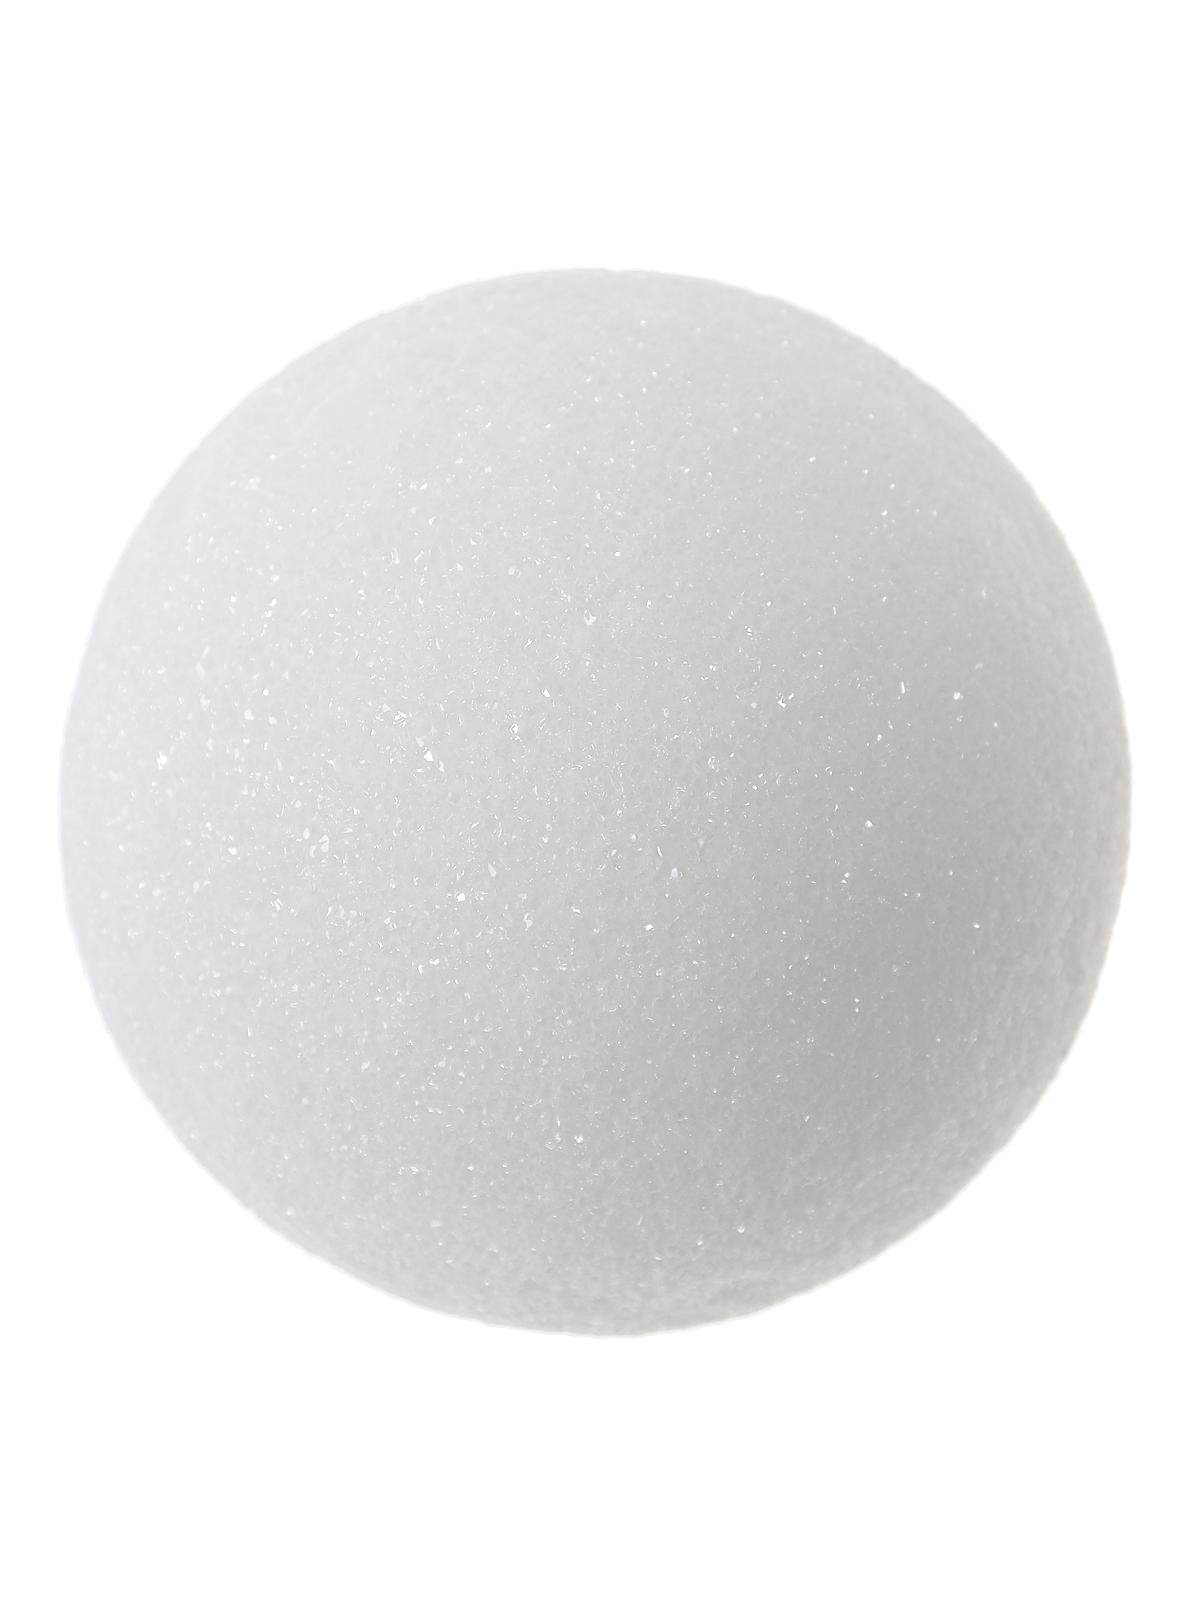 FloraCraft Ball - Styrofoam - 1-1/4-inch - 12 Piece - White